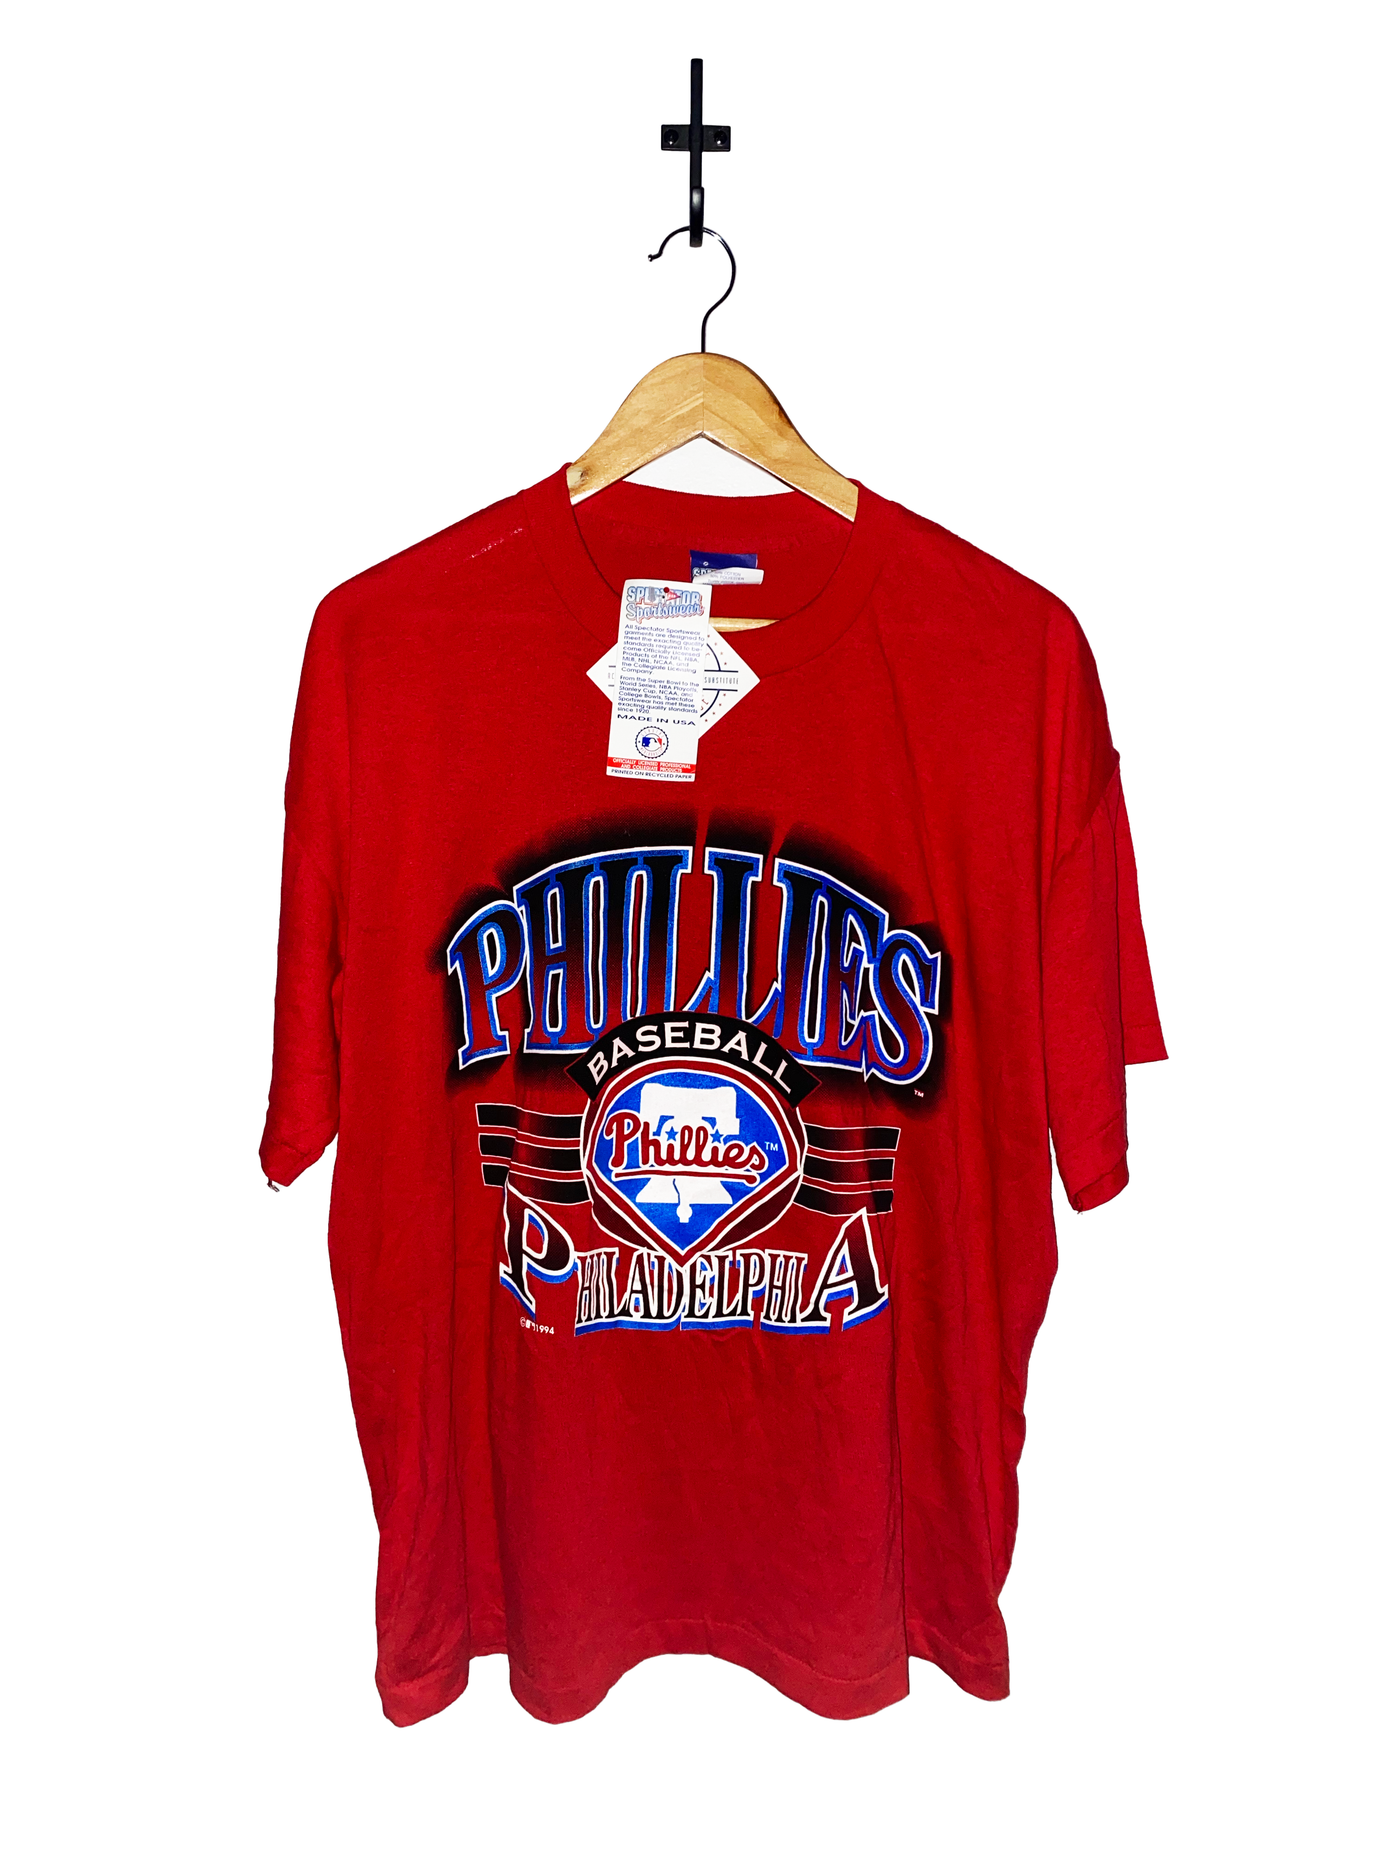 Vintage 1994 Phillies T-Shirt